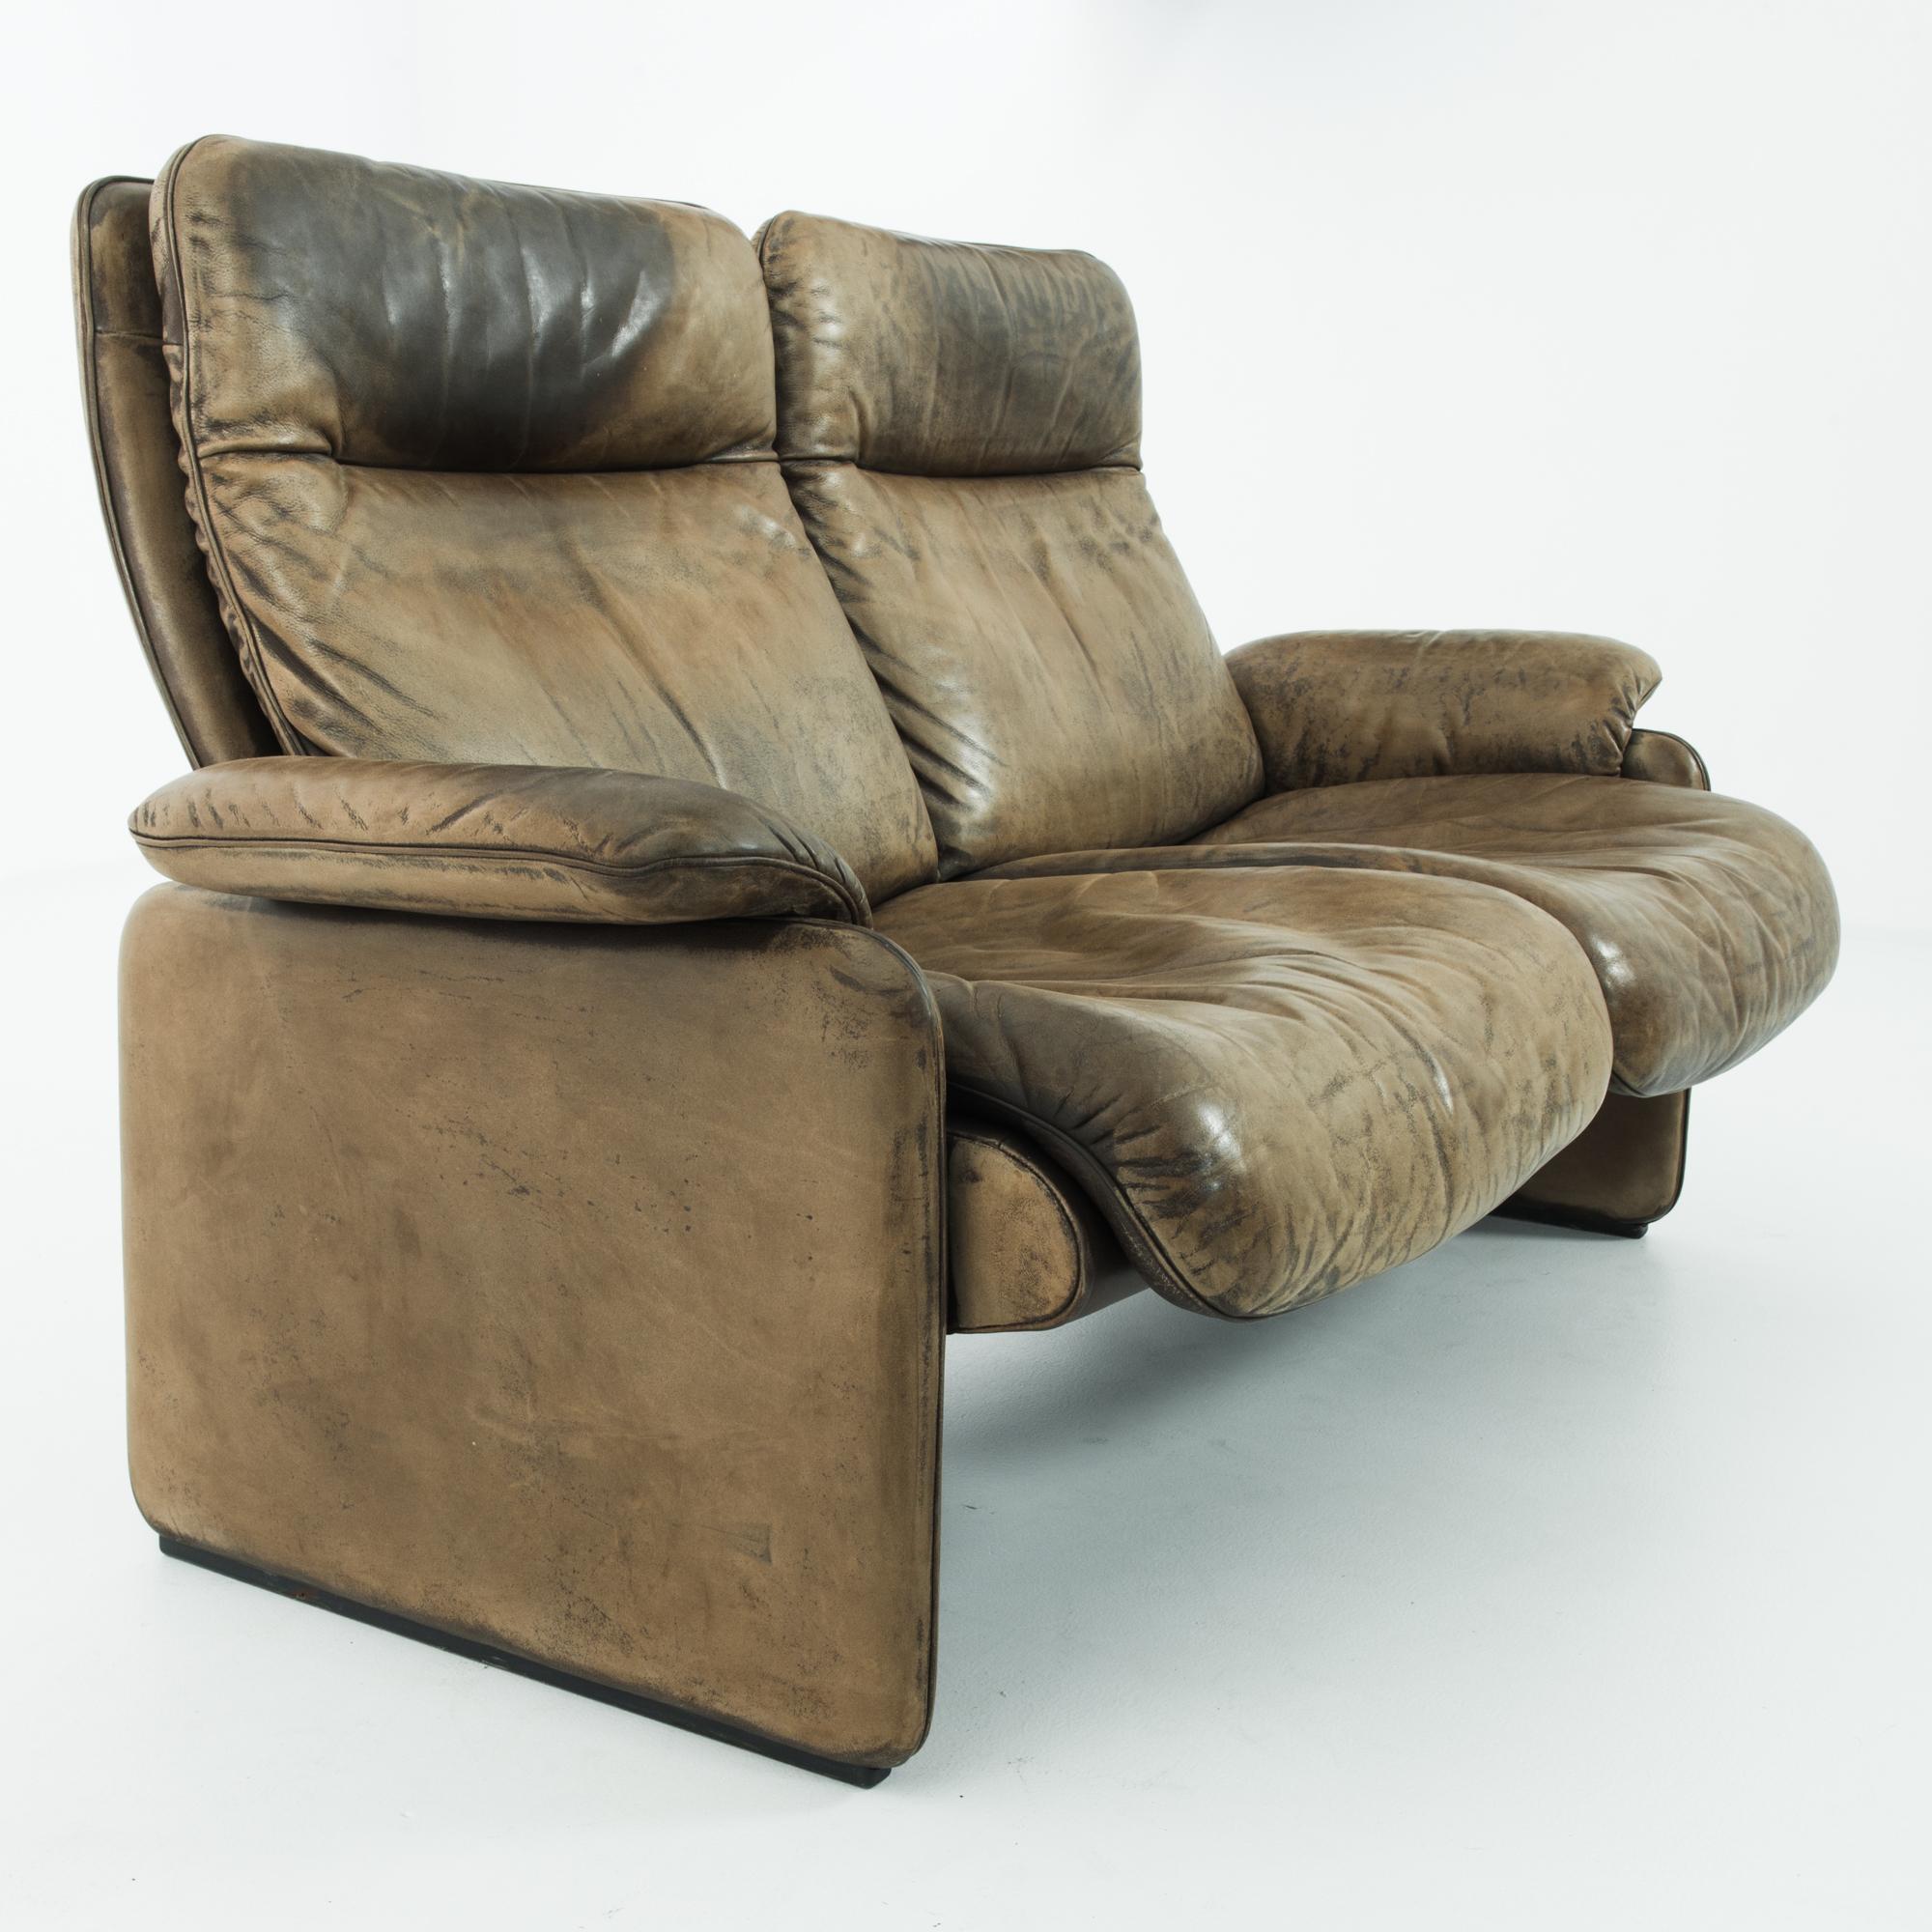 1970s Swiss Leather Sofa by De Sede 1